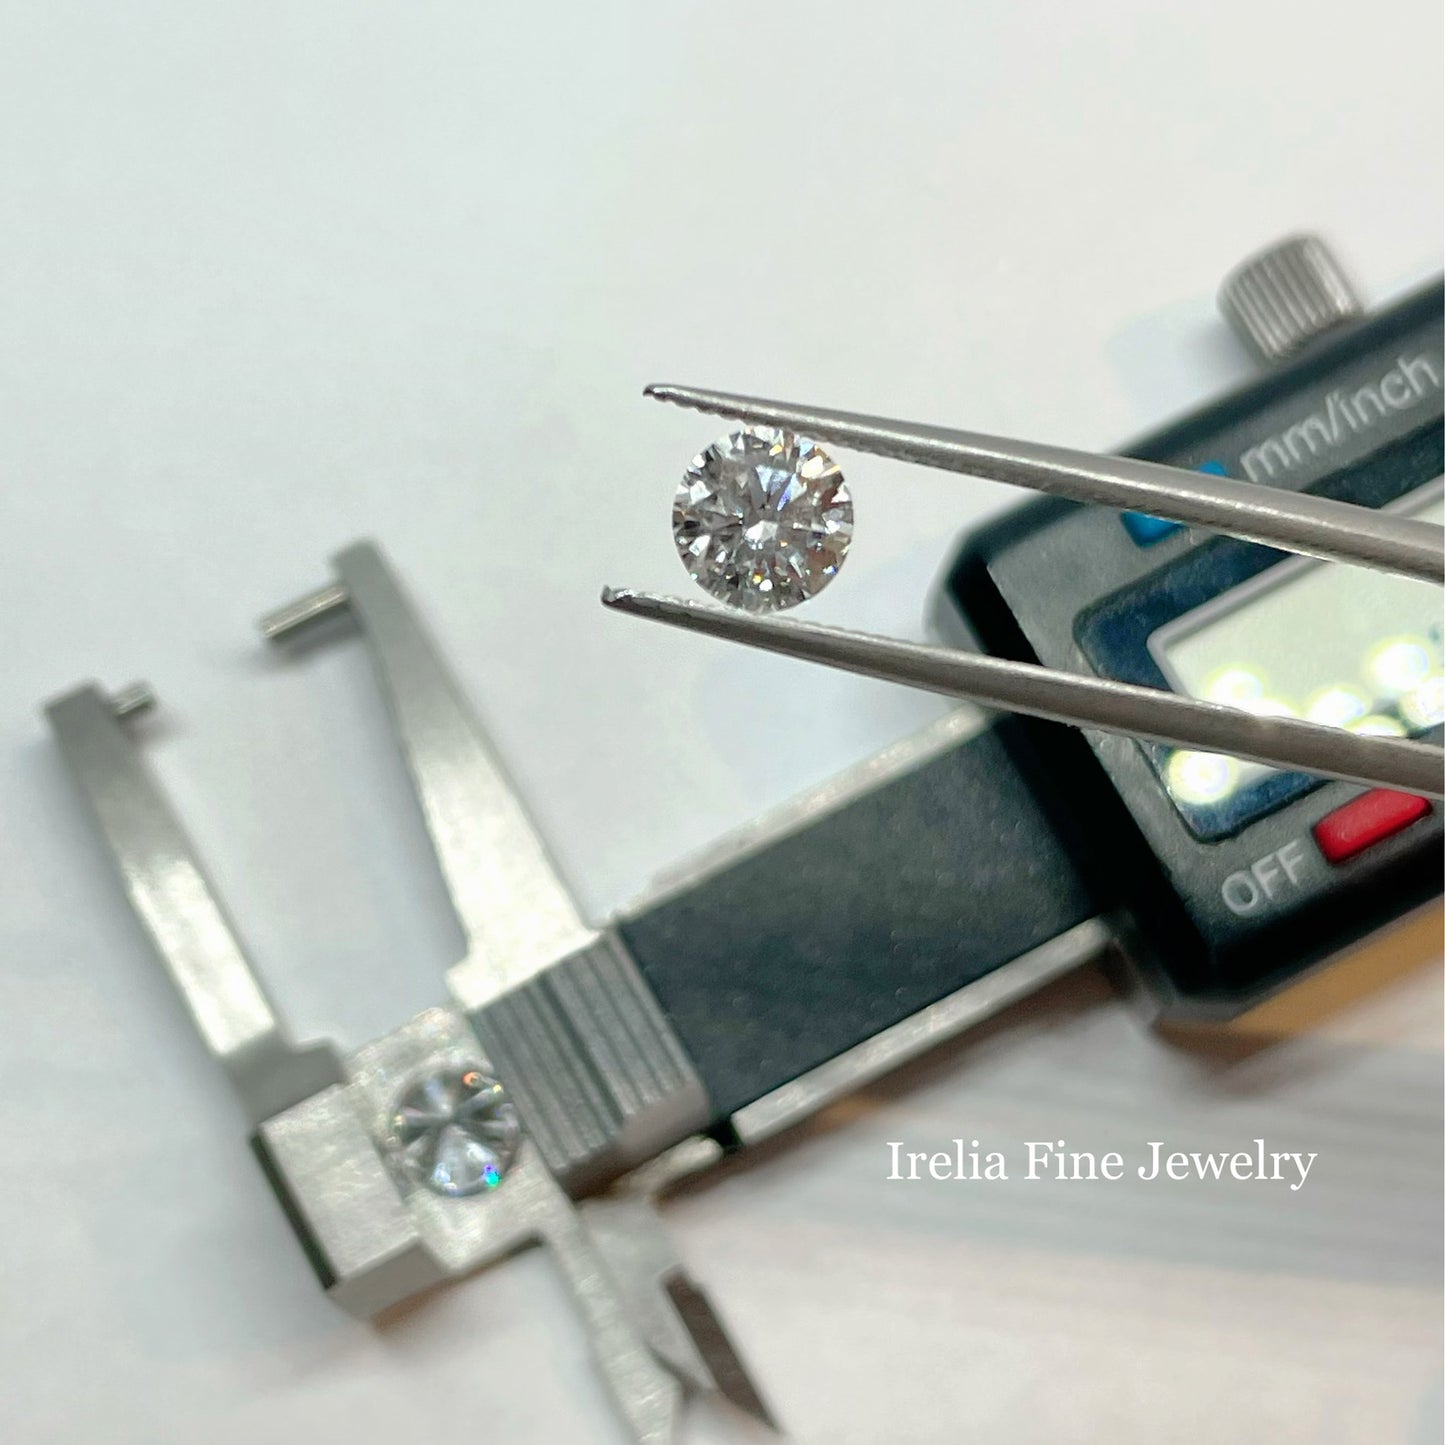 Learn about Diamonds Irelia Fine Jewelry SHOPPING GUIDE